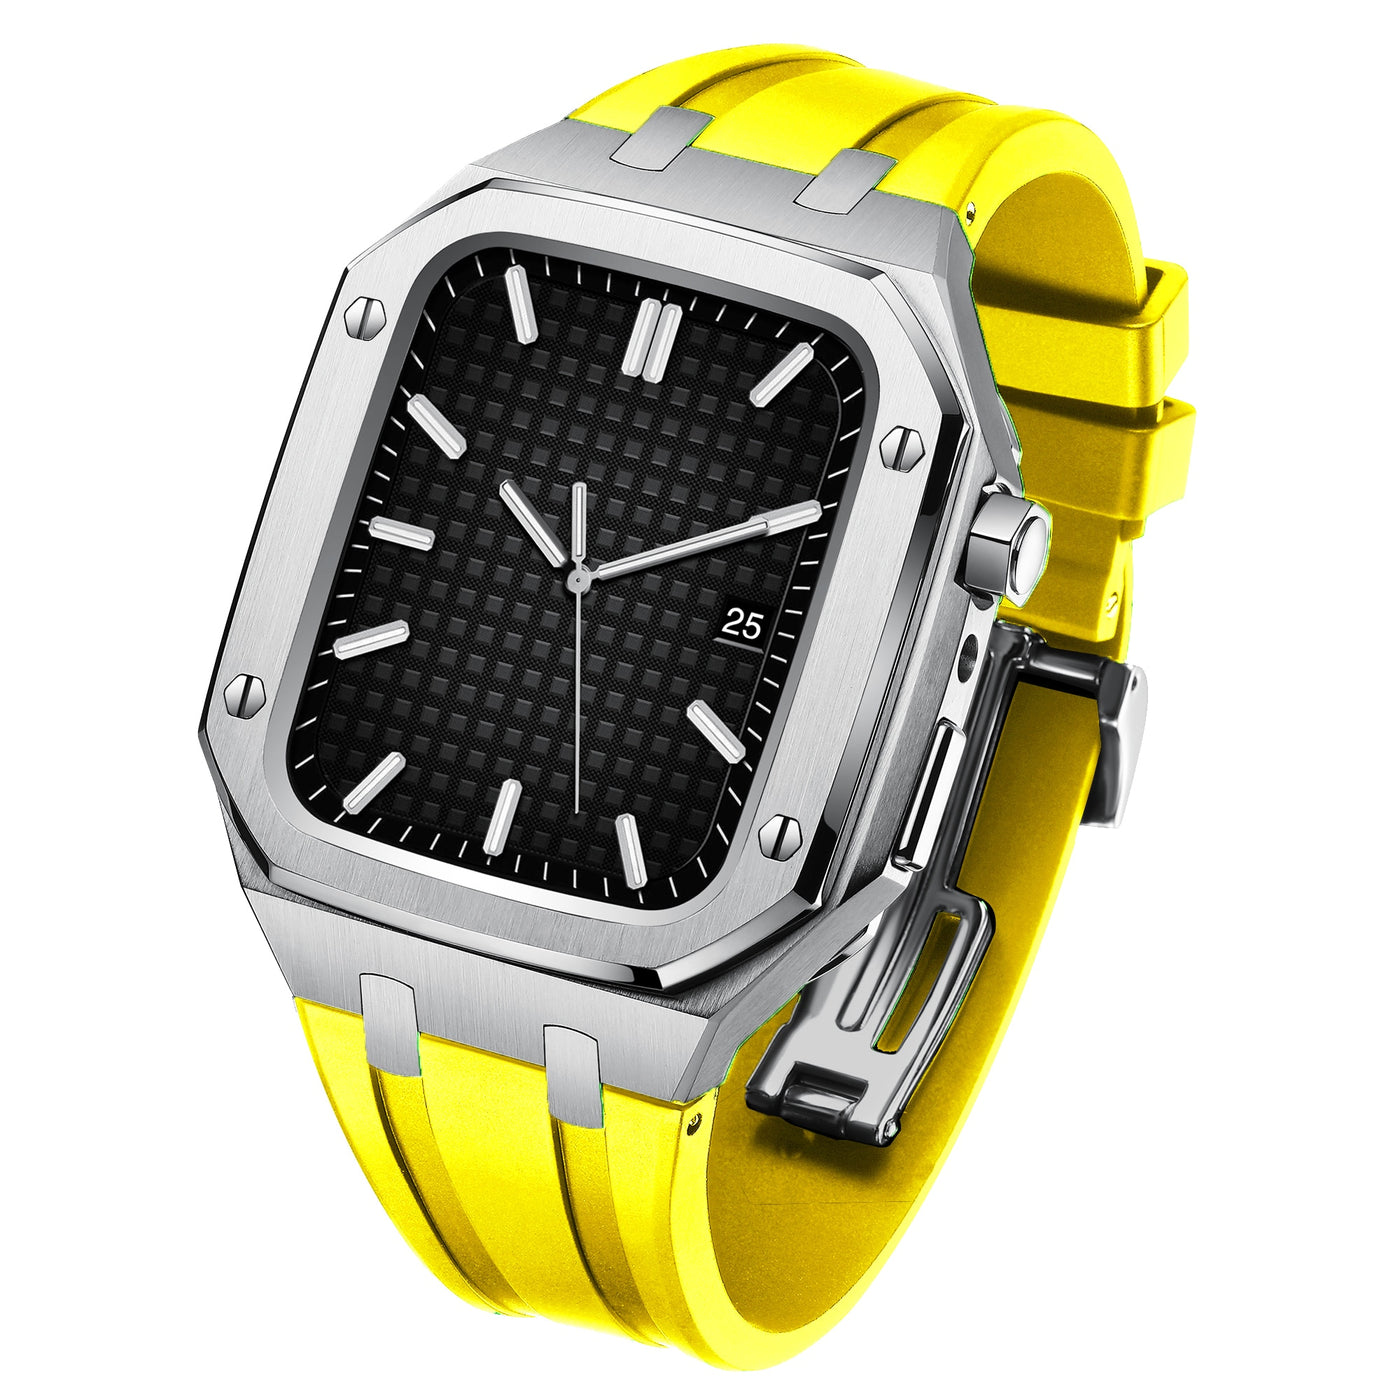 Marilla Premium Apple Watch Upgrade Kit